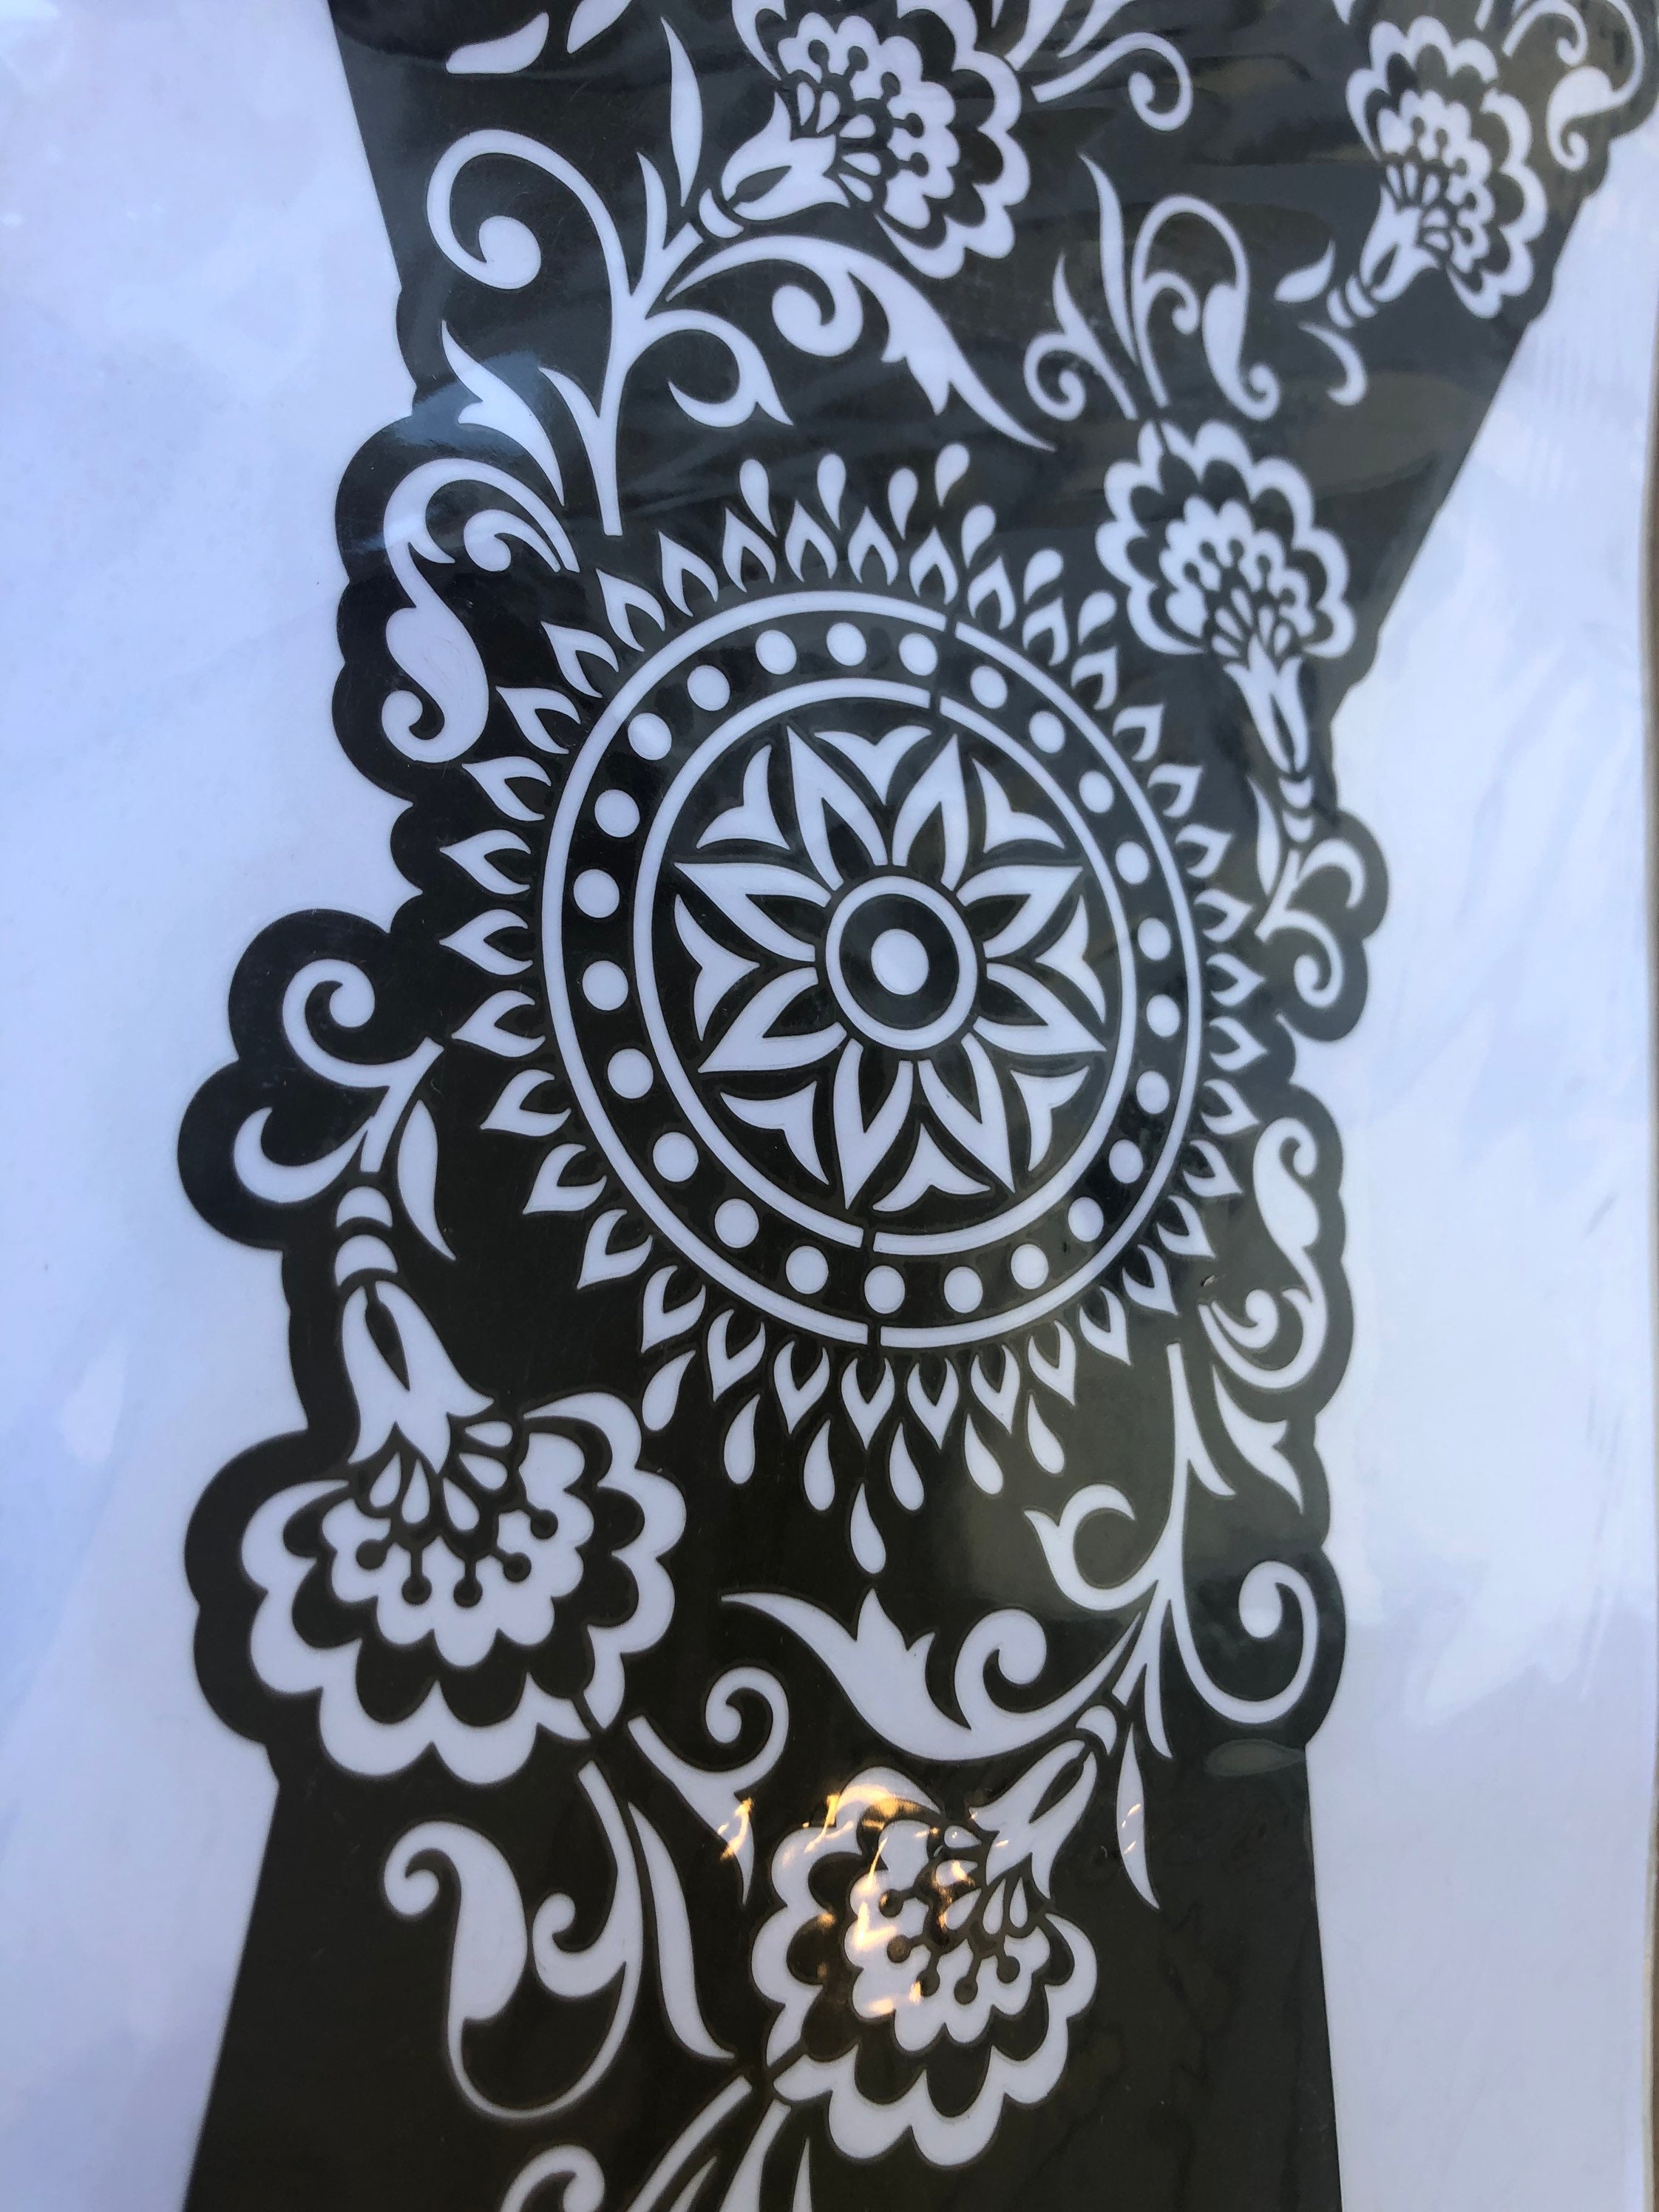 Henna Stencils Printable